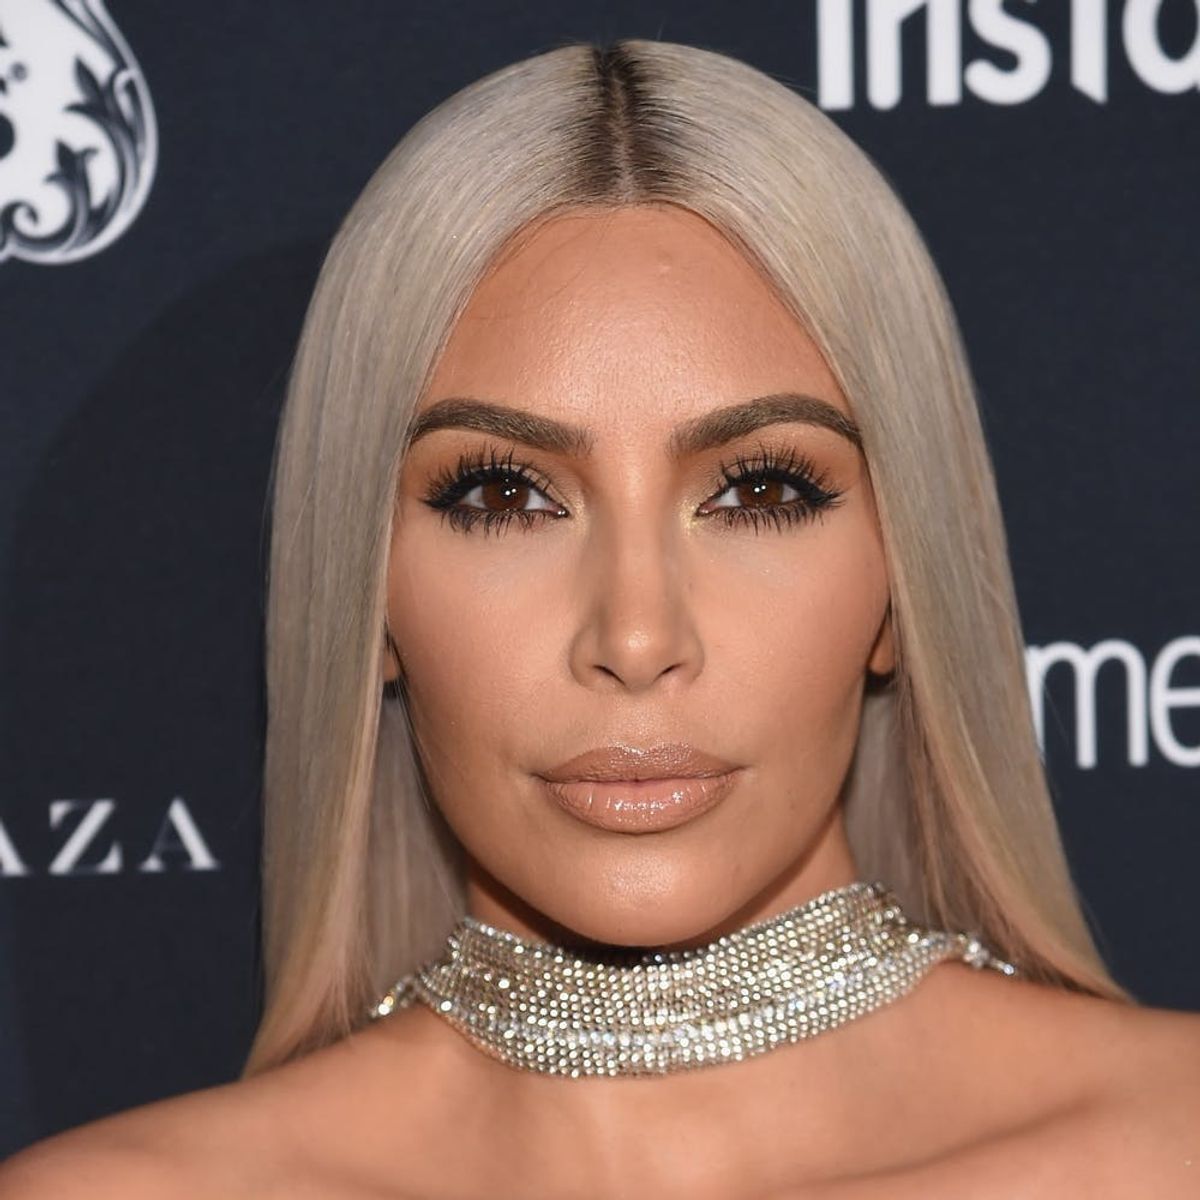 Kim Kardashian West Has Finally Addressed Those Surrogacy Rumors